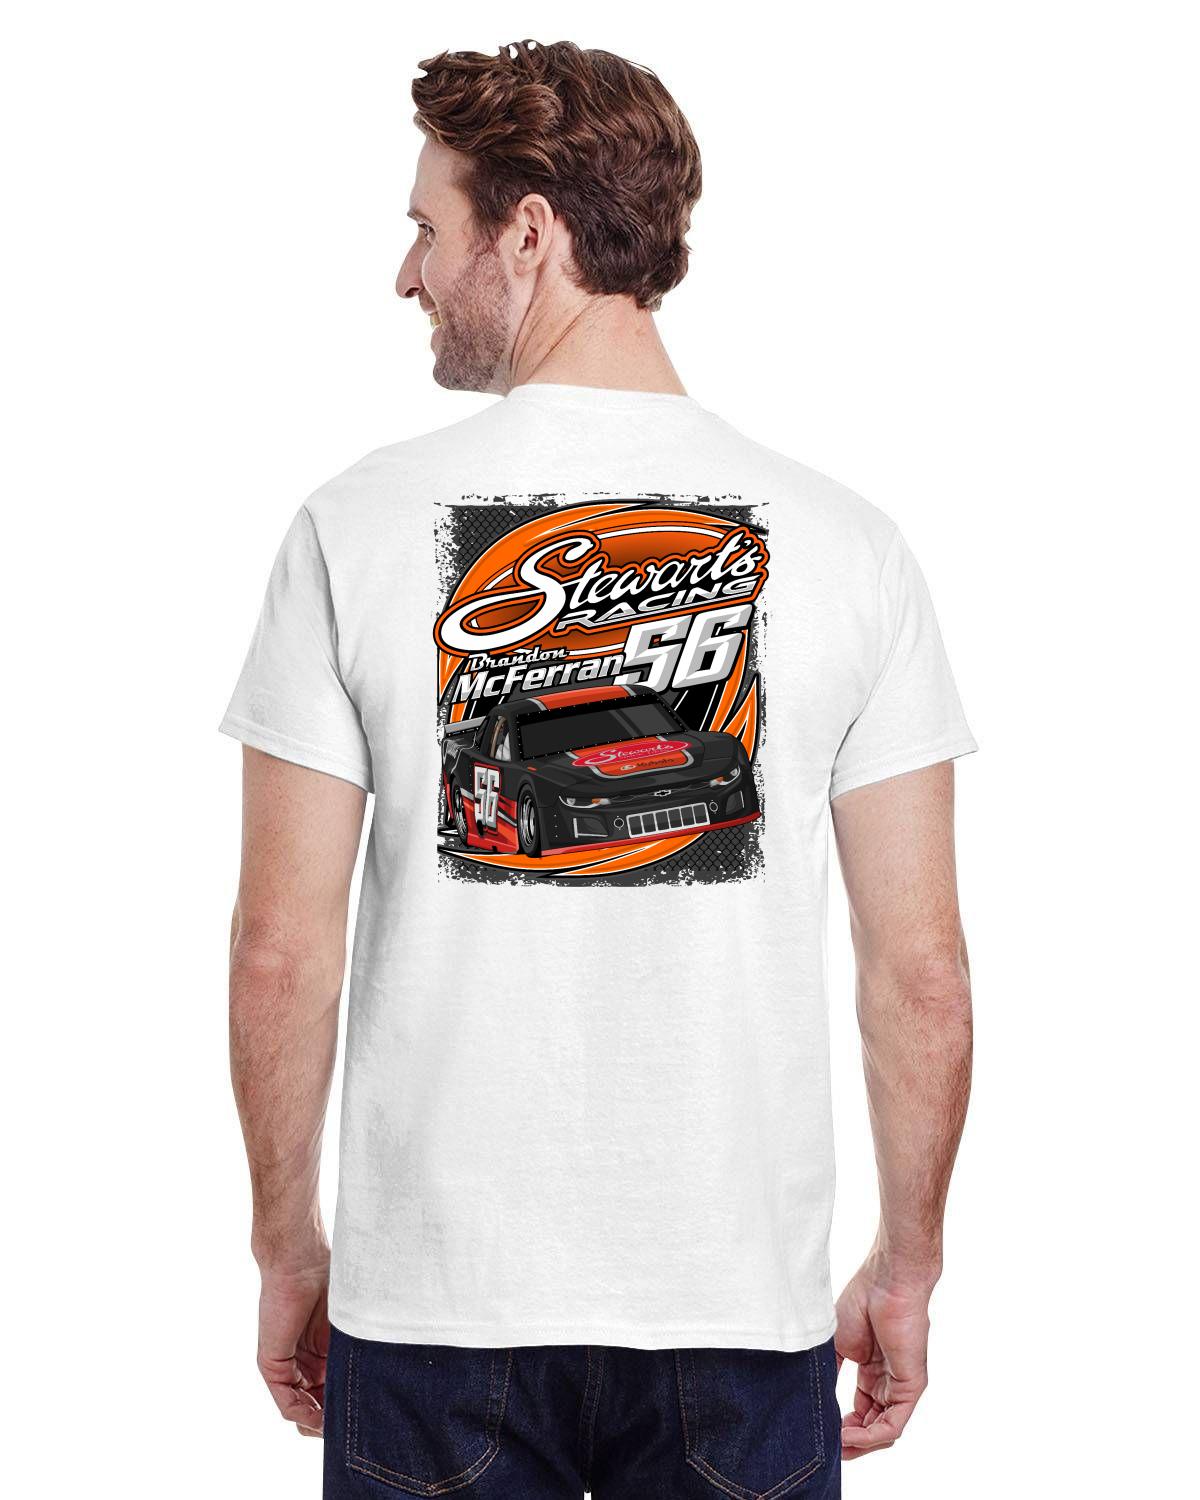 Stewart's Racing Brandon McFerran 56 Adult tshirt